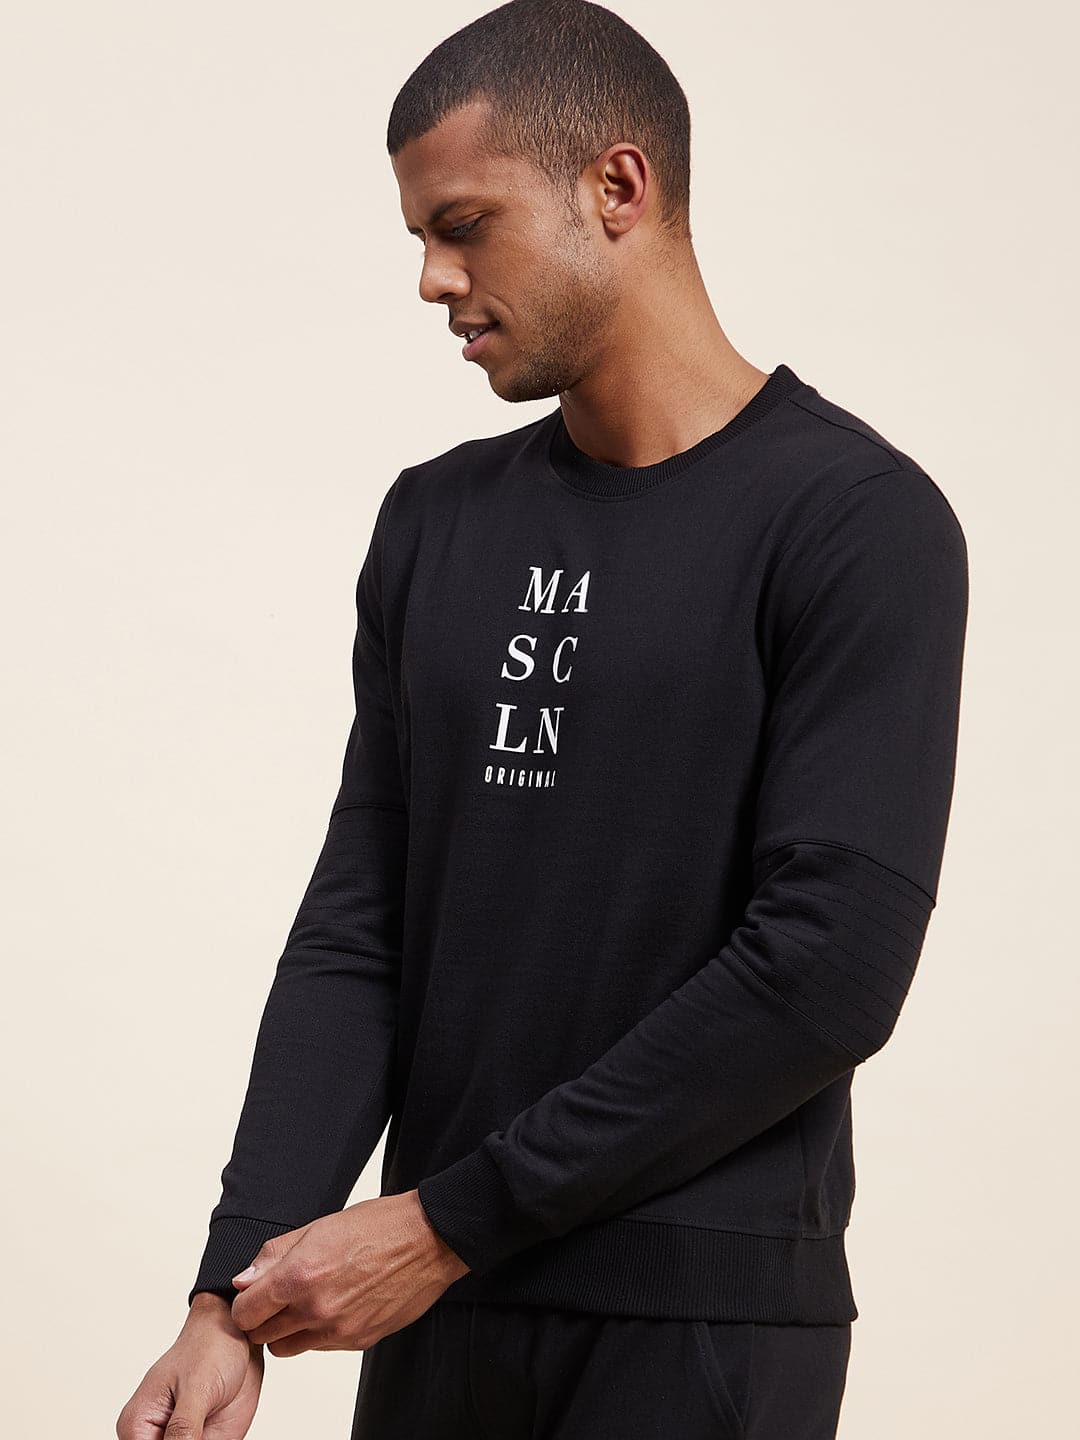 Men's Black Vertical MASCLN Print Sweatshirt - LYUSH-MASCLN